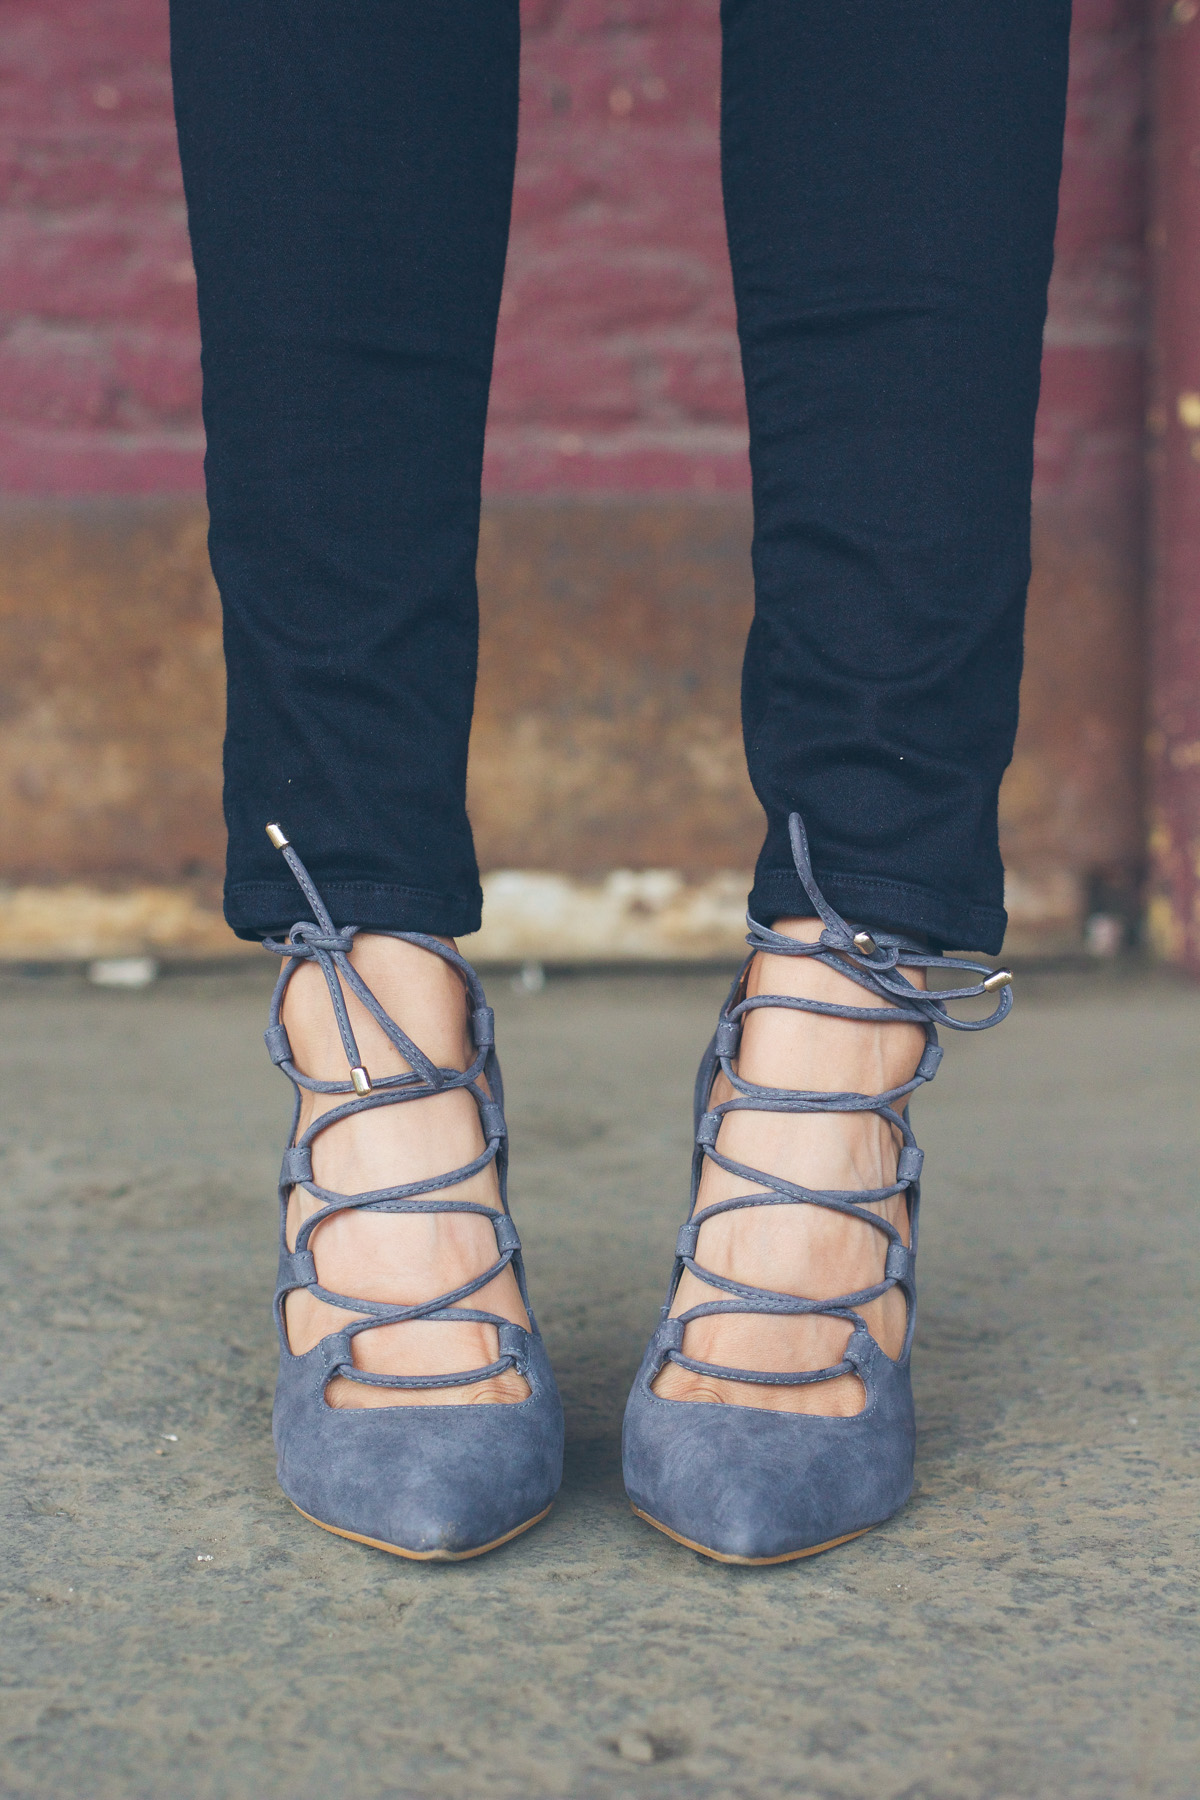 grey lace up heels